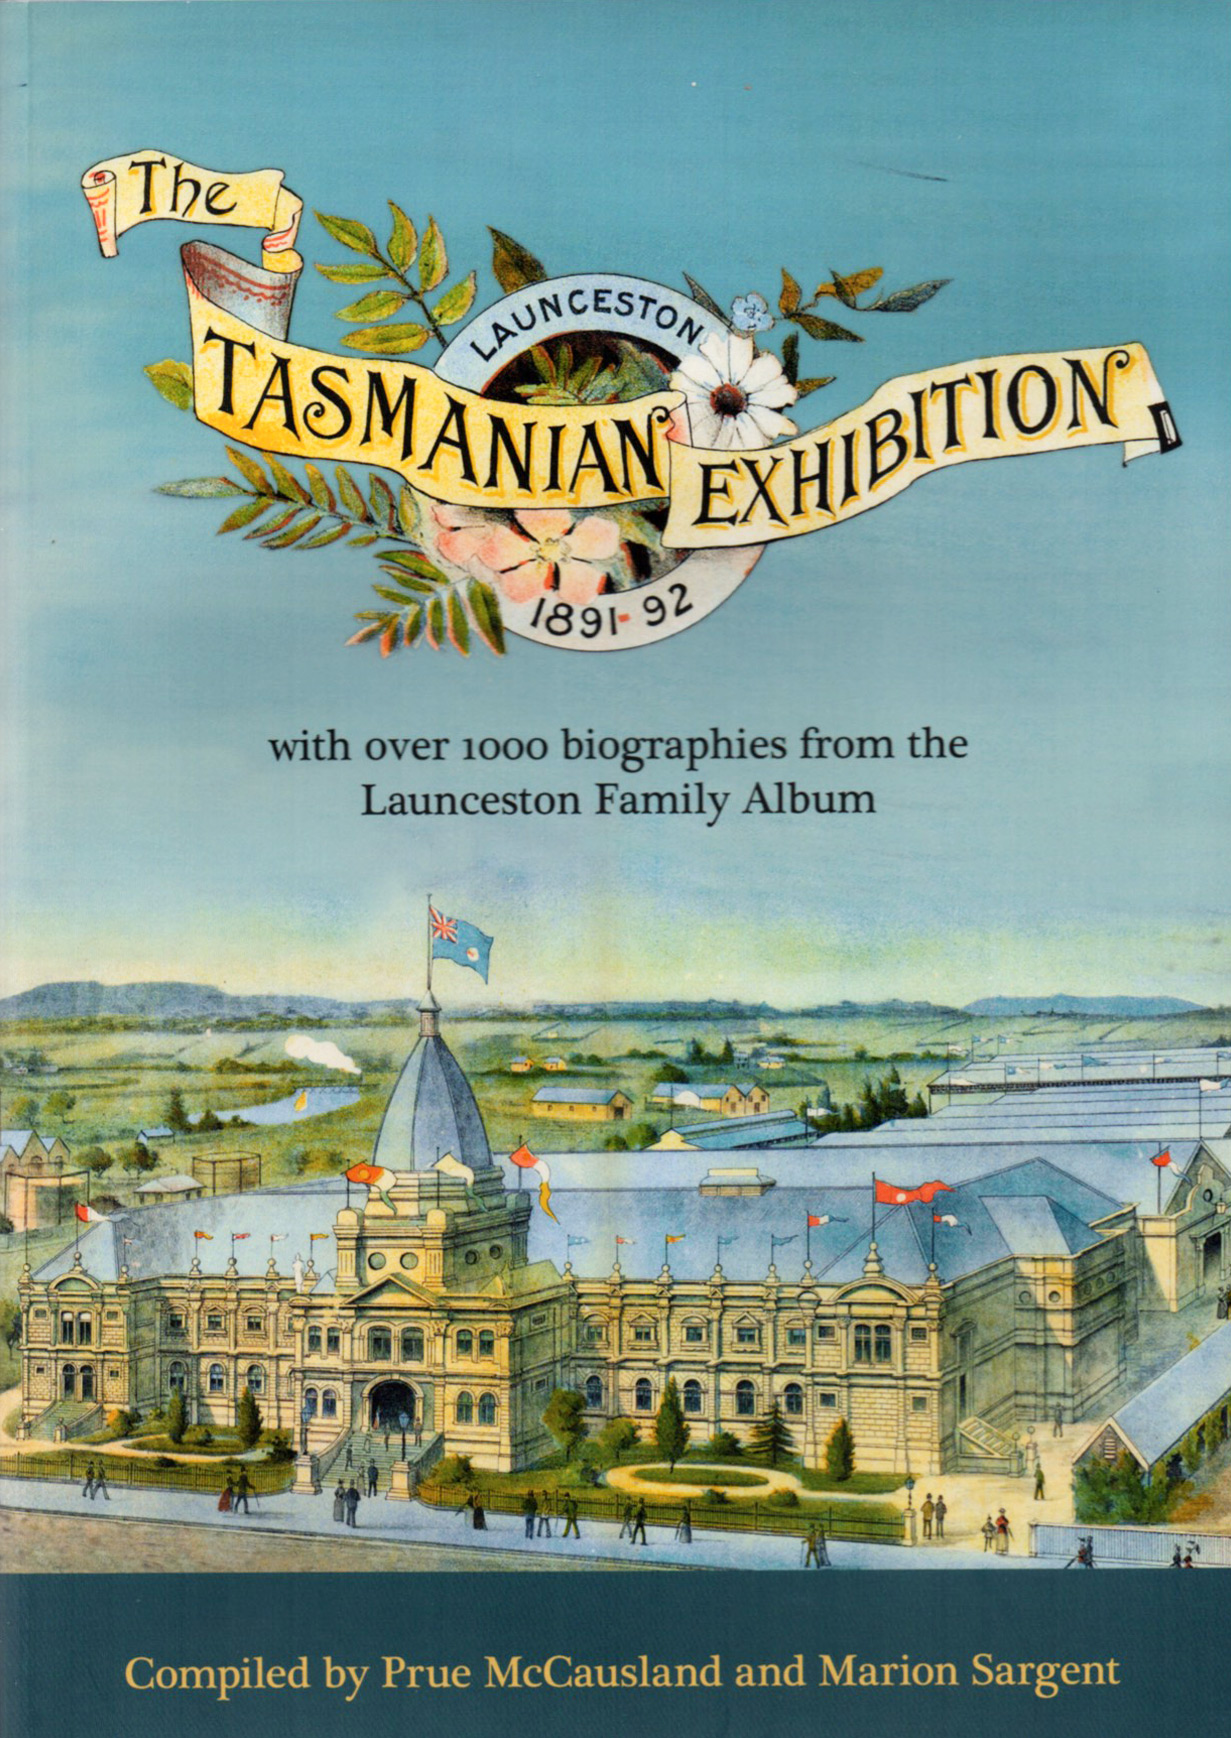 The Tasmanian Exhibition, Launceston